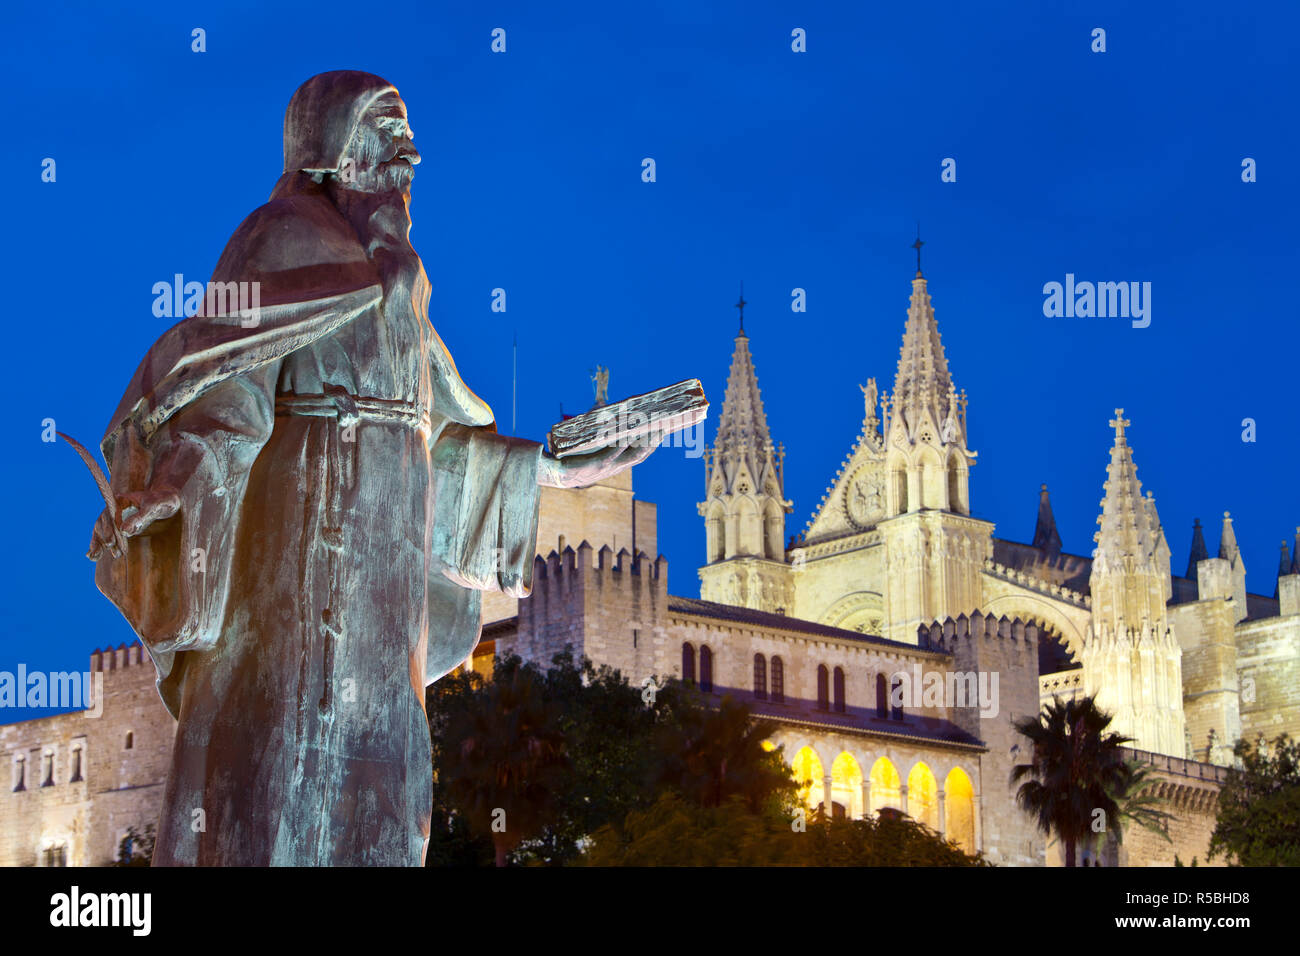 Ramon Llull Statue & Cathedral La Seu, Palma de Mallorca, Mallorca, Balearic Islands, Spain Stock Photo